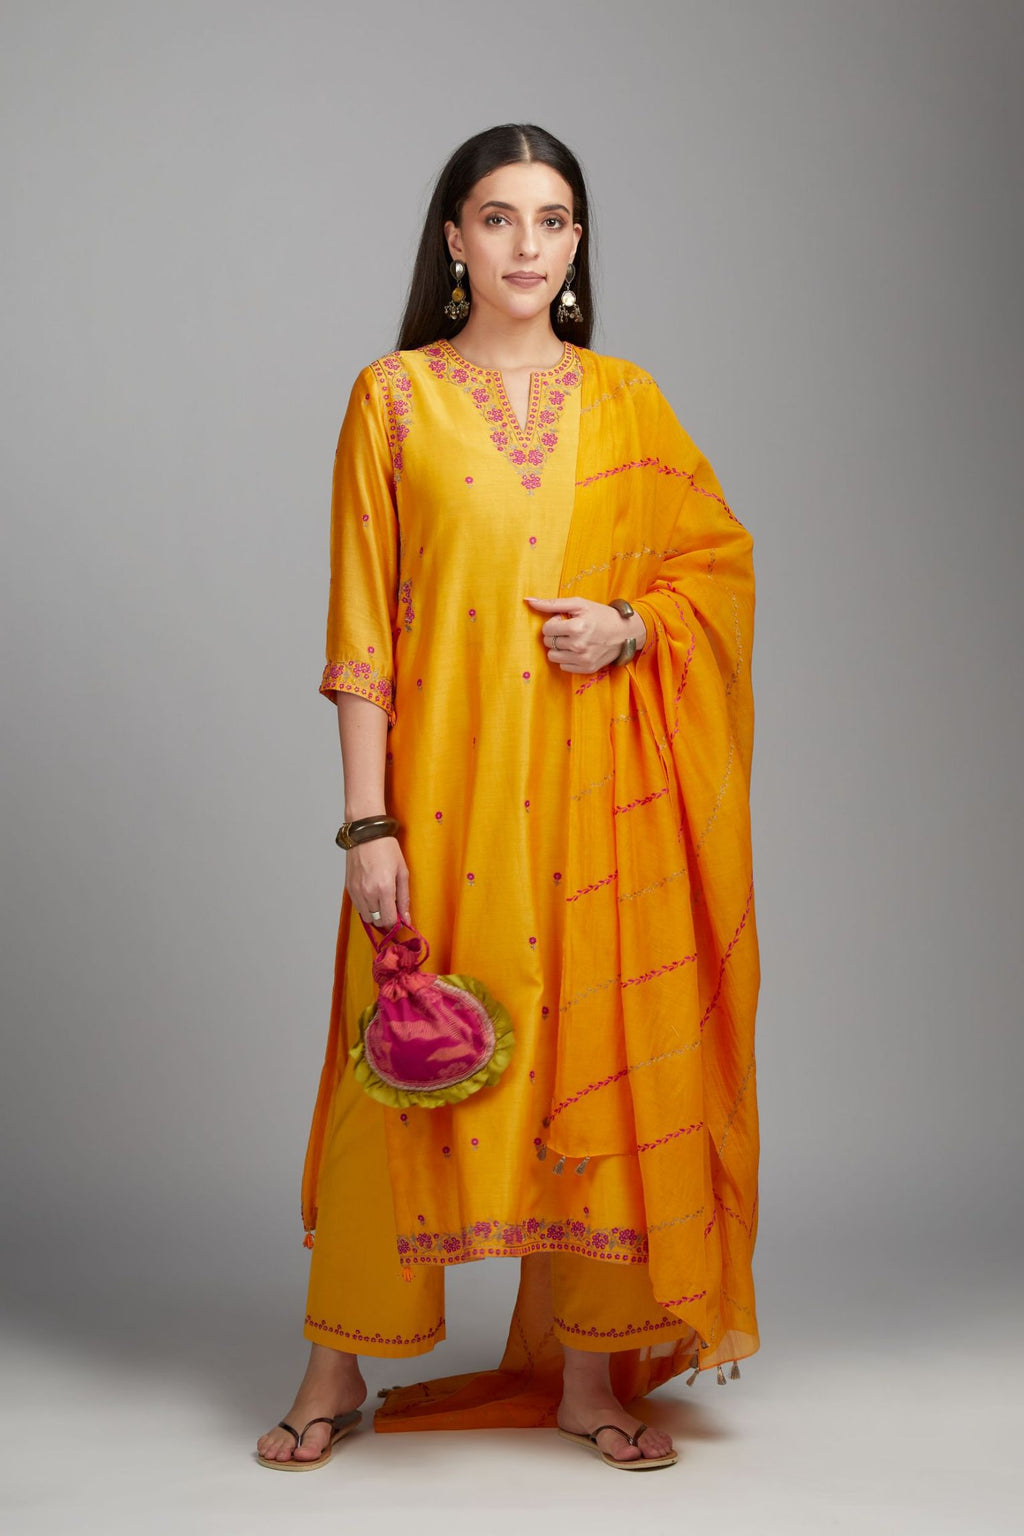 Mango yellow Cotton Chanderi embroidered dupatta with gold zari tassels at corners